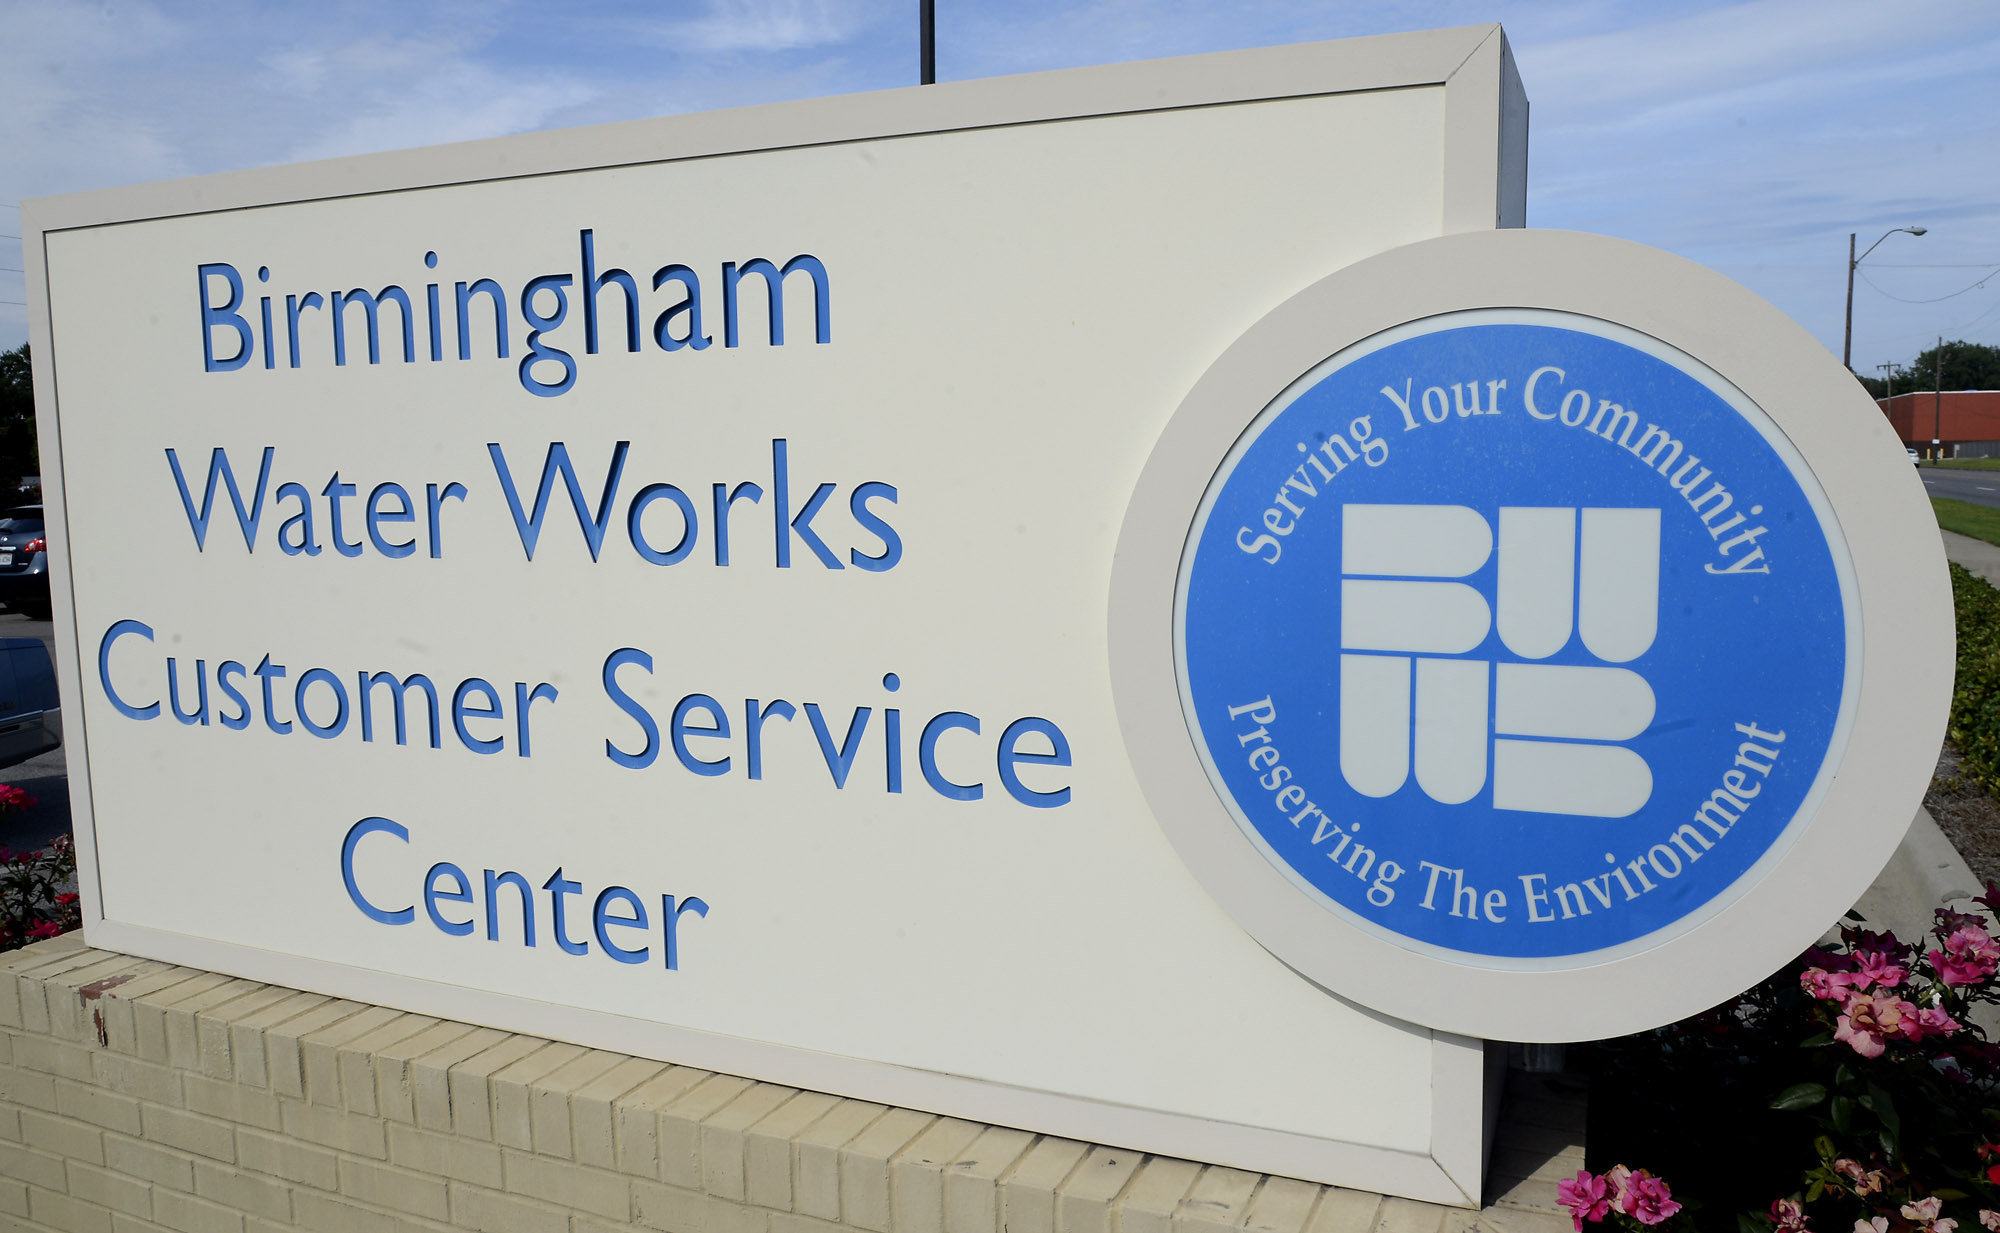 Groups want Birmingham Water Works Board members who will stop shutoffs